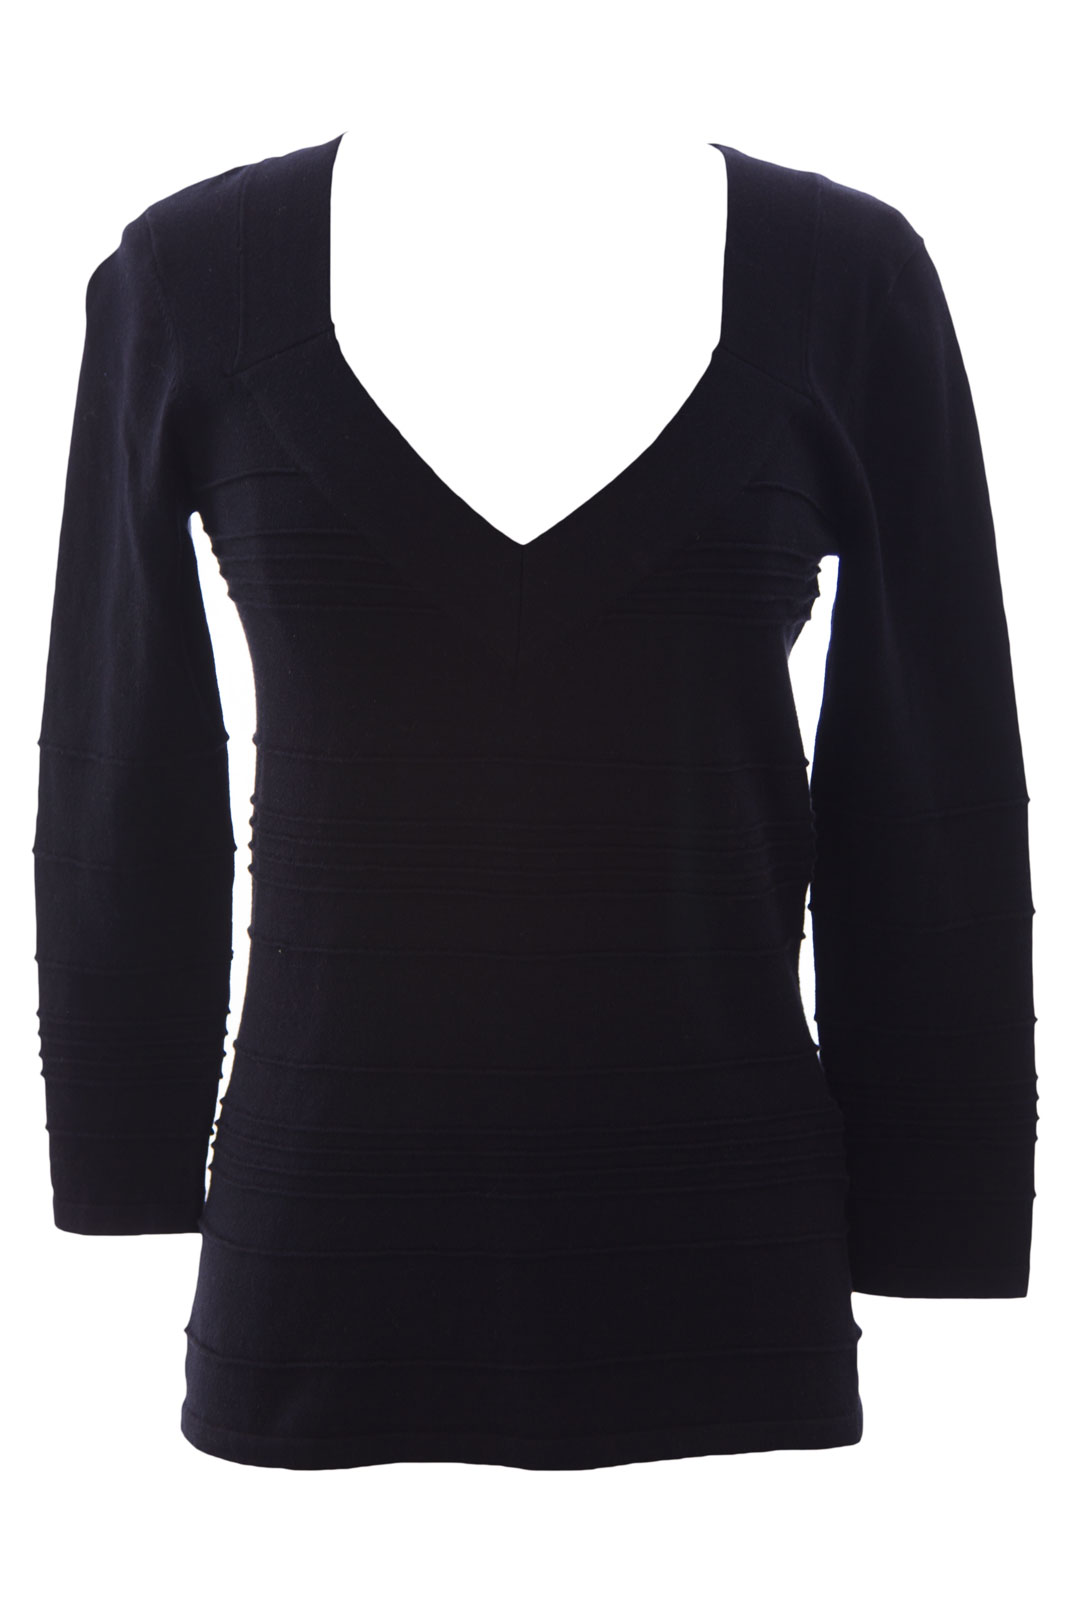 August Silk Women's Black Squared V-Neck Ribbed Sweater M $68 | eBay